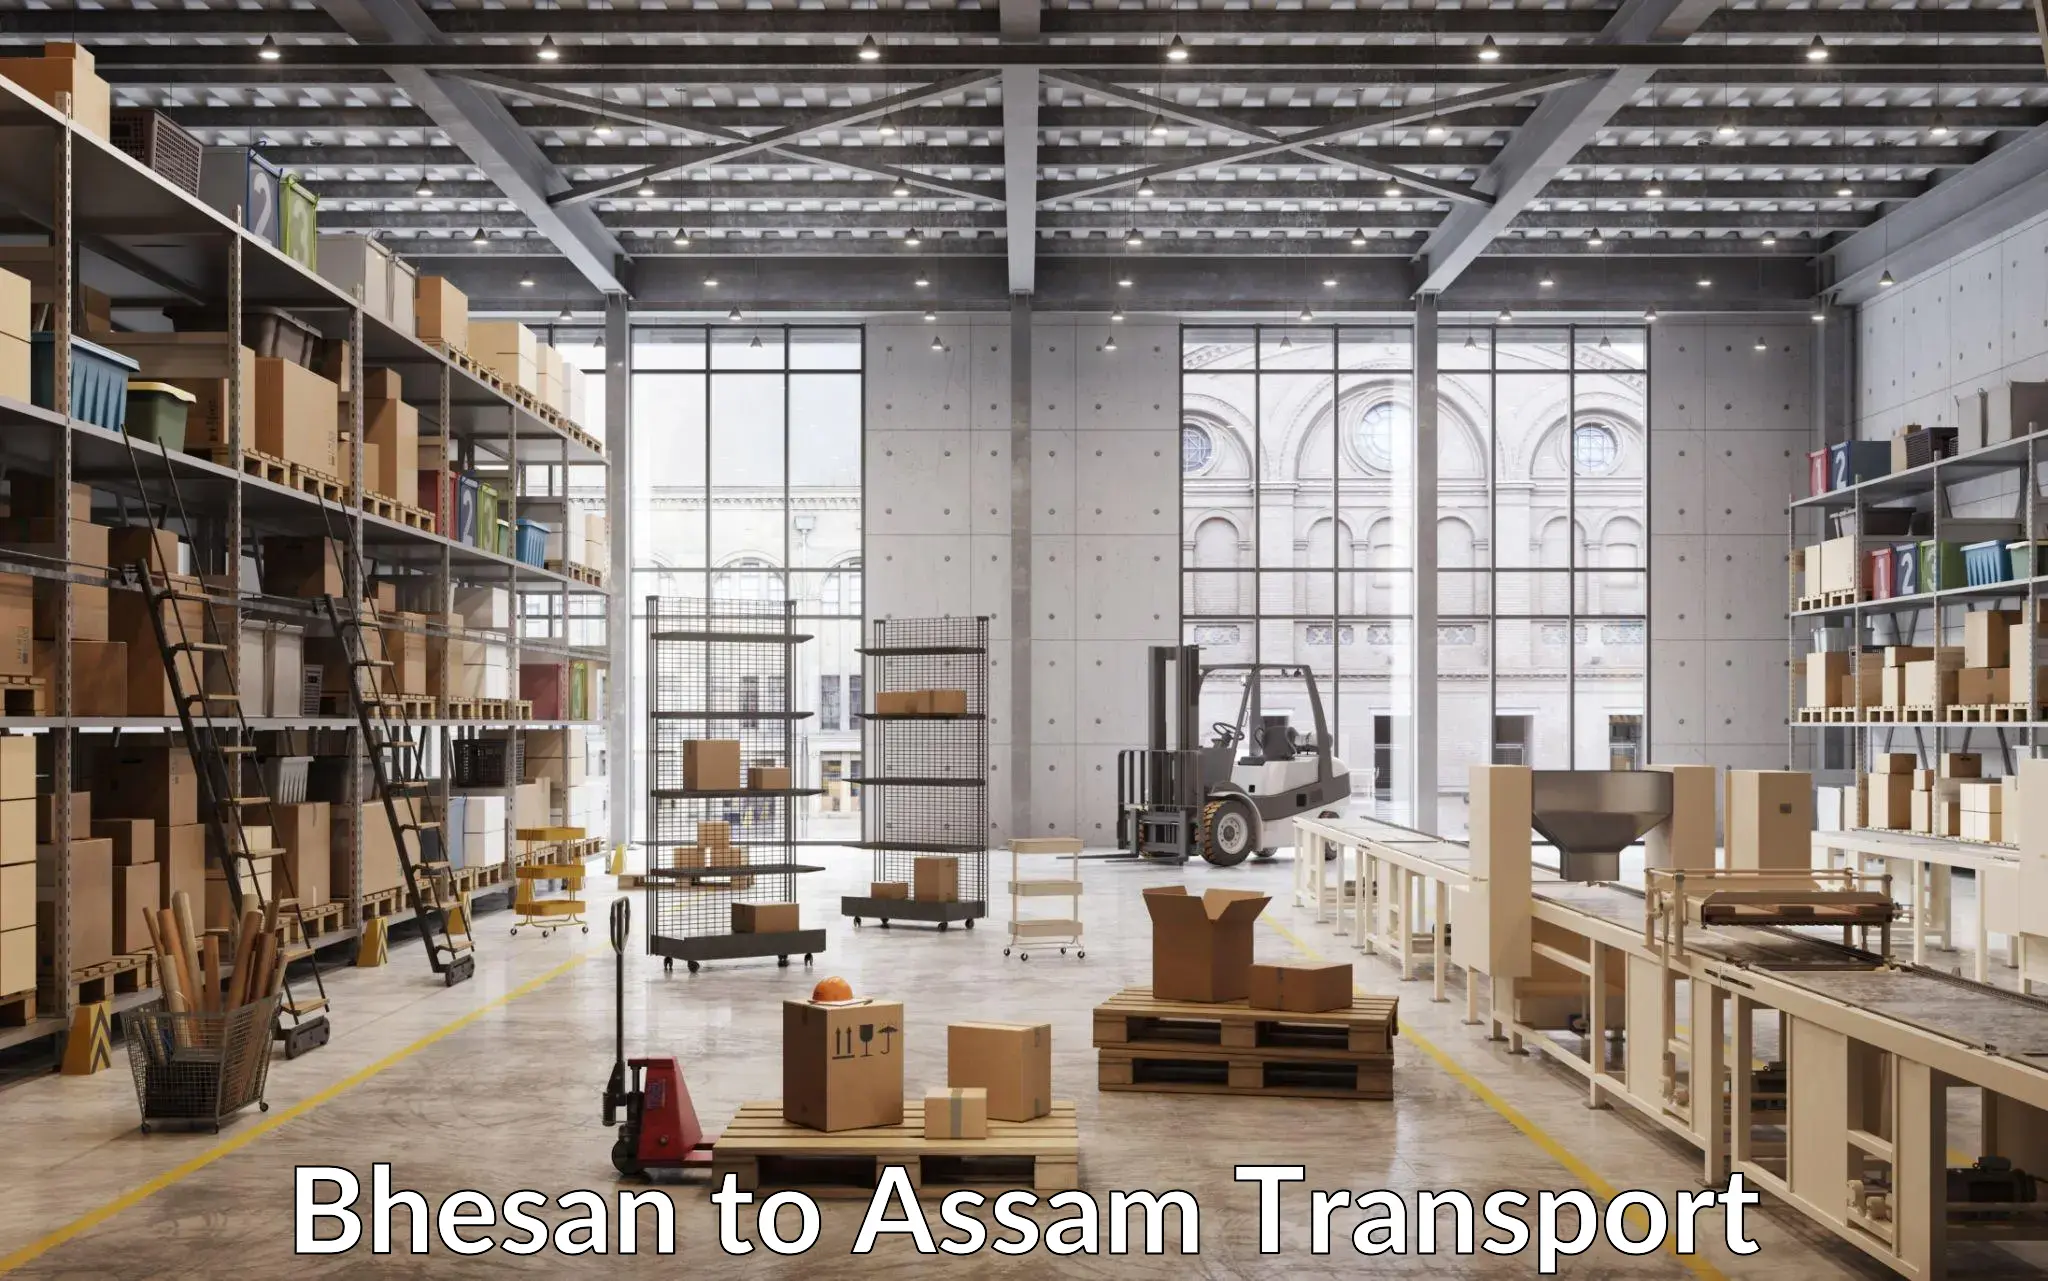 Nearby transport service Bhesan to Lala Assam